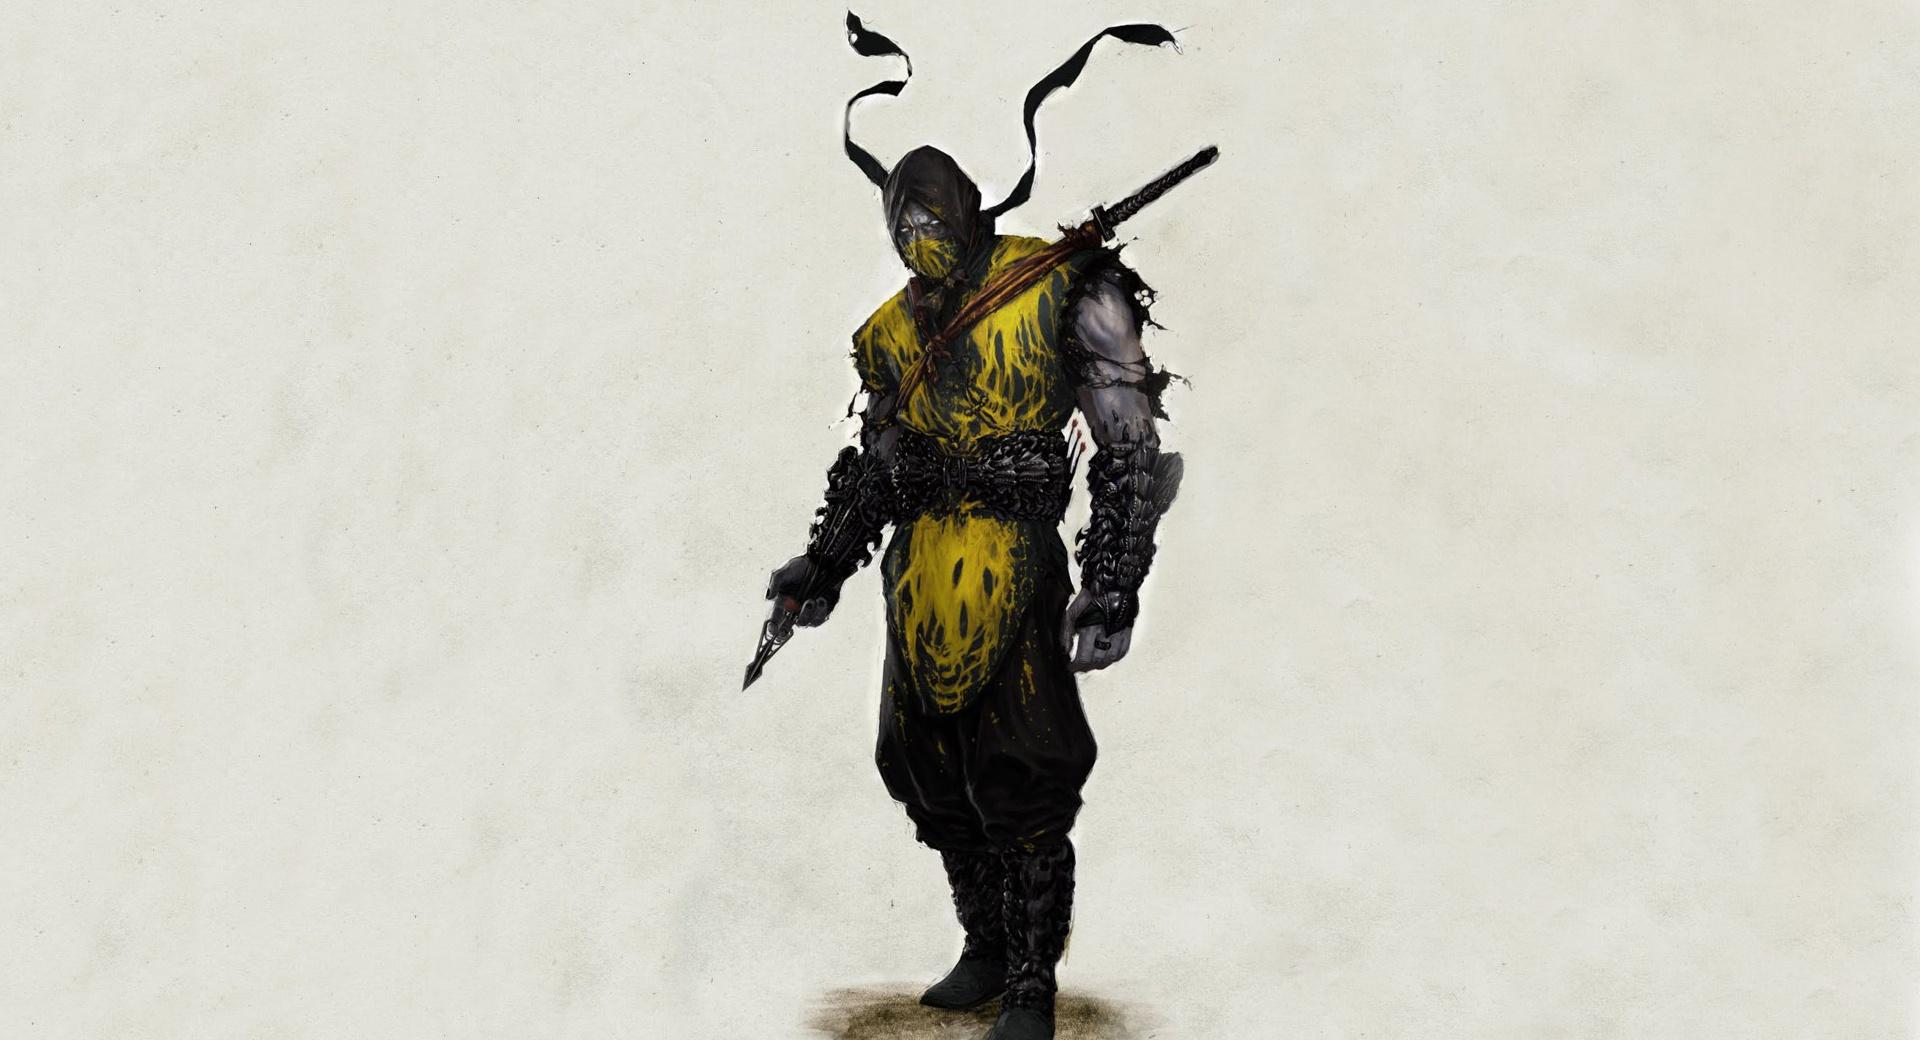 Mortal Kombat Scorpion Drawing at 1024 x 1024 iPad size wallpapers HD quality